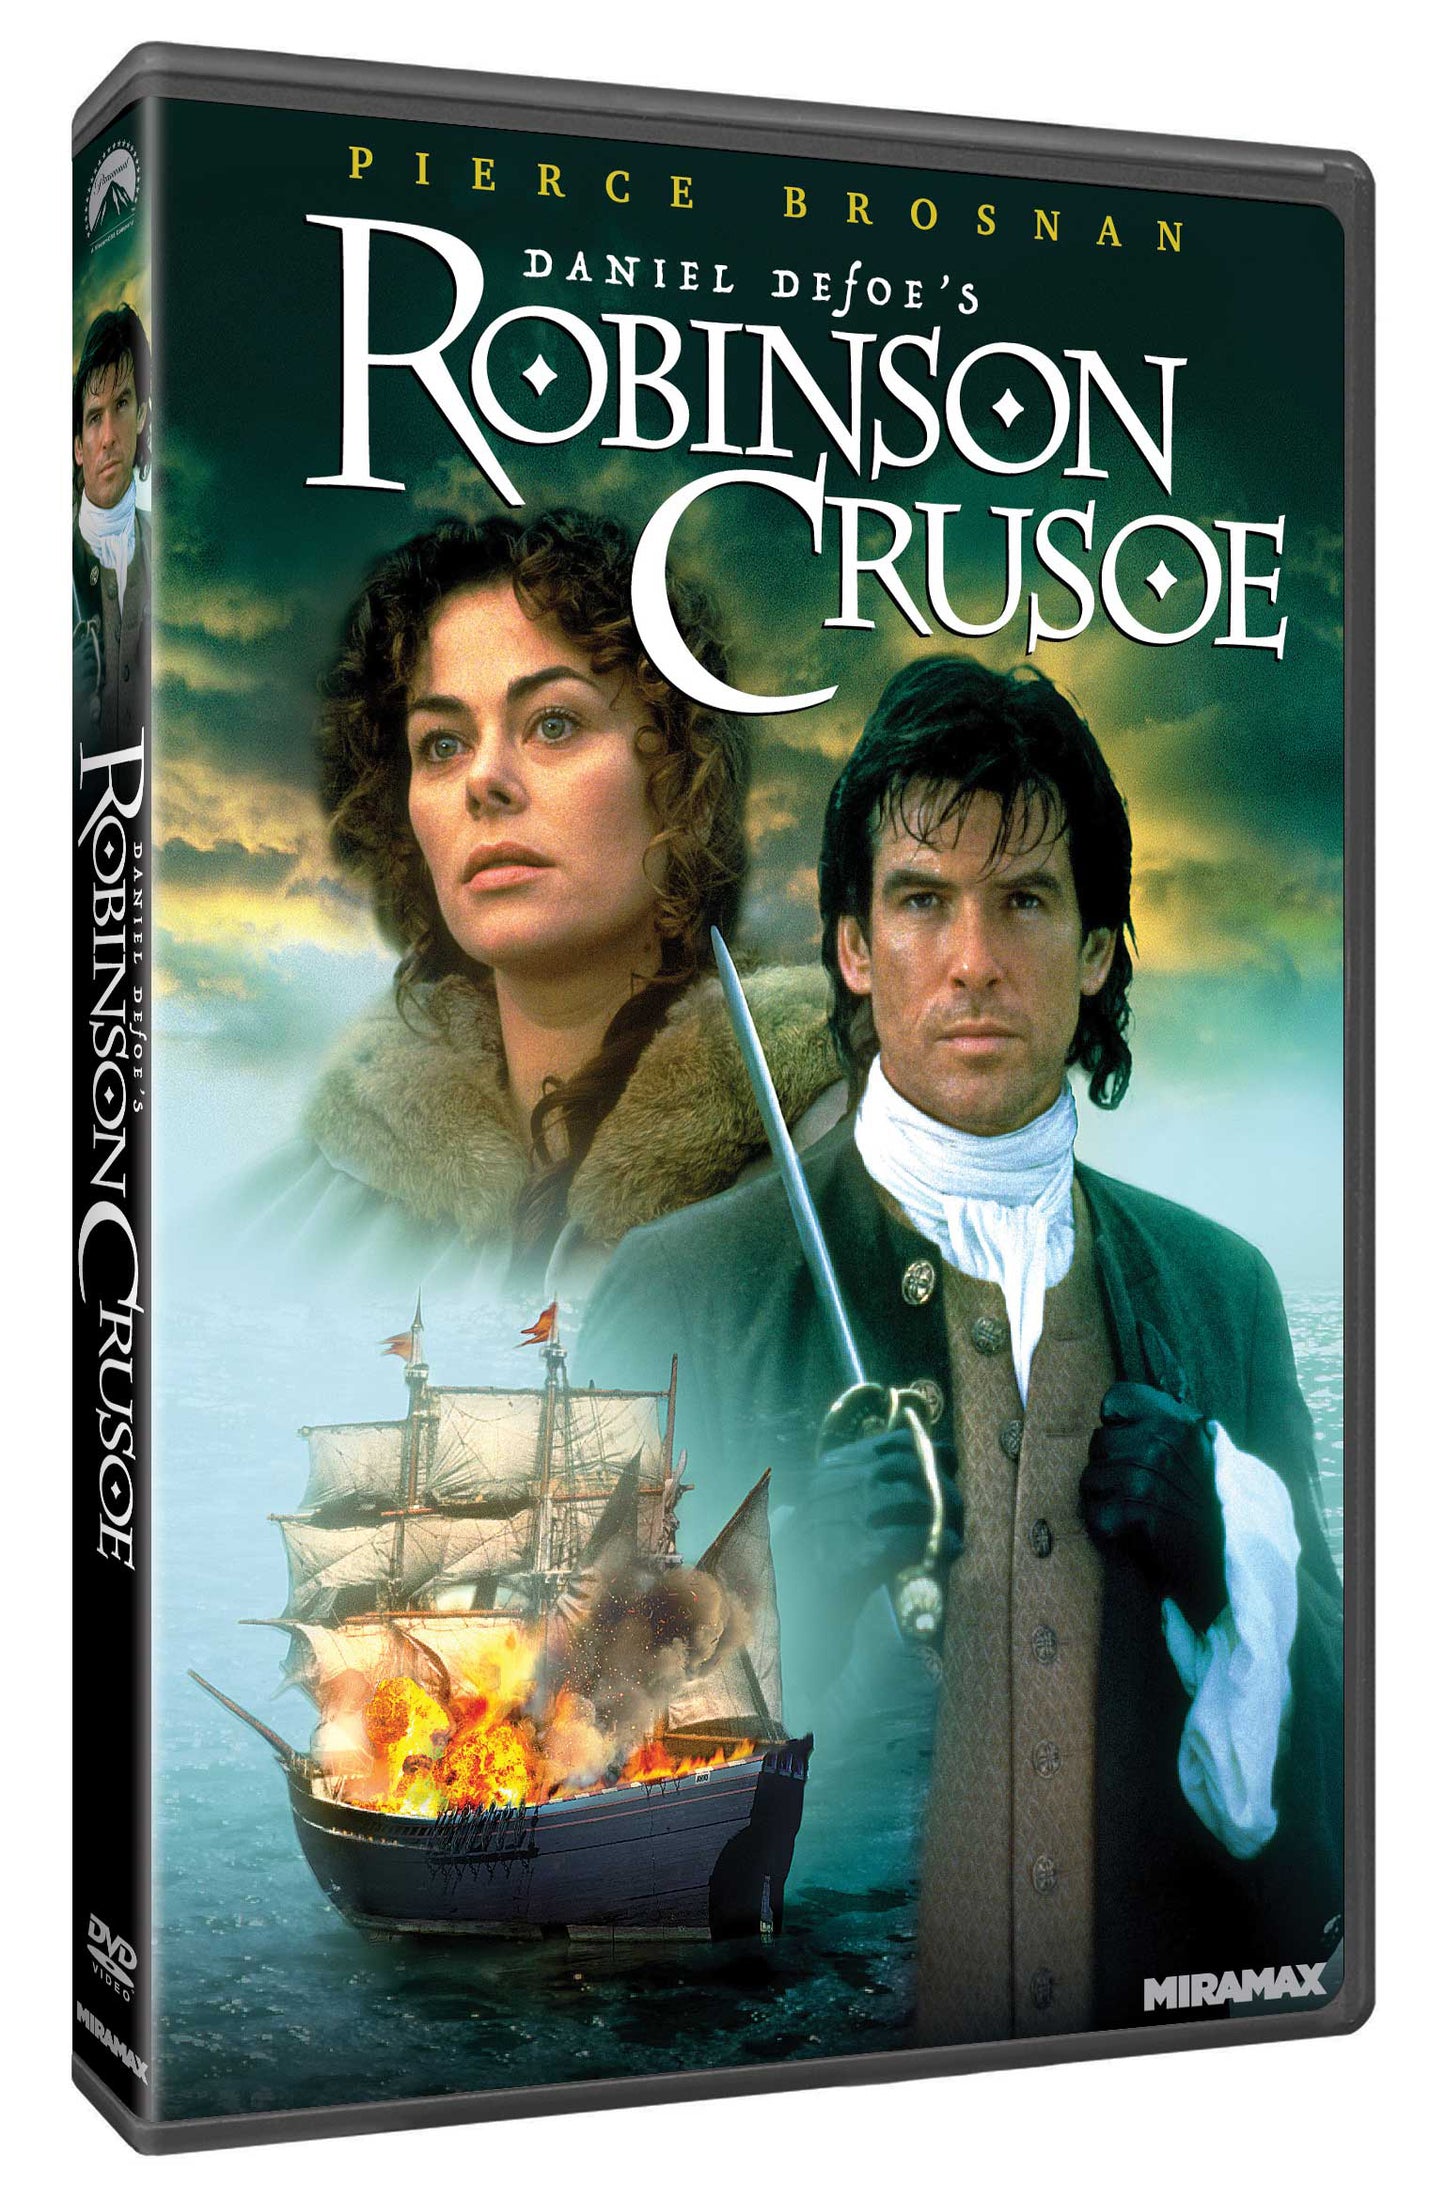 Daniel Defoe's Robinson Crusoe cover art